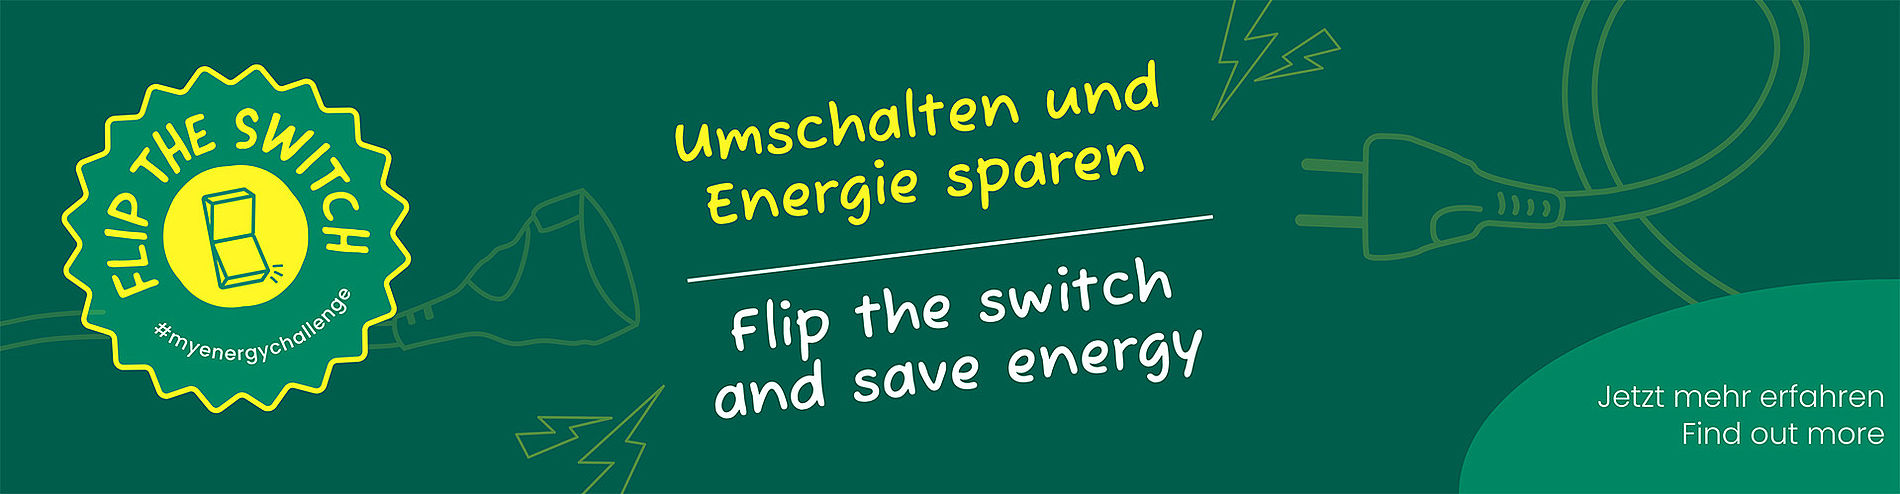 Saving energy. Flip the Switch.